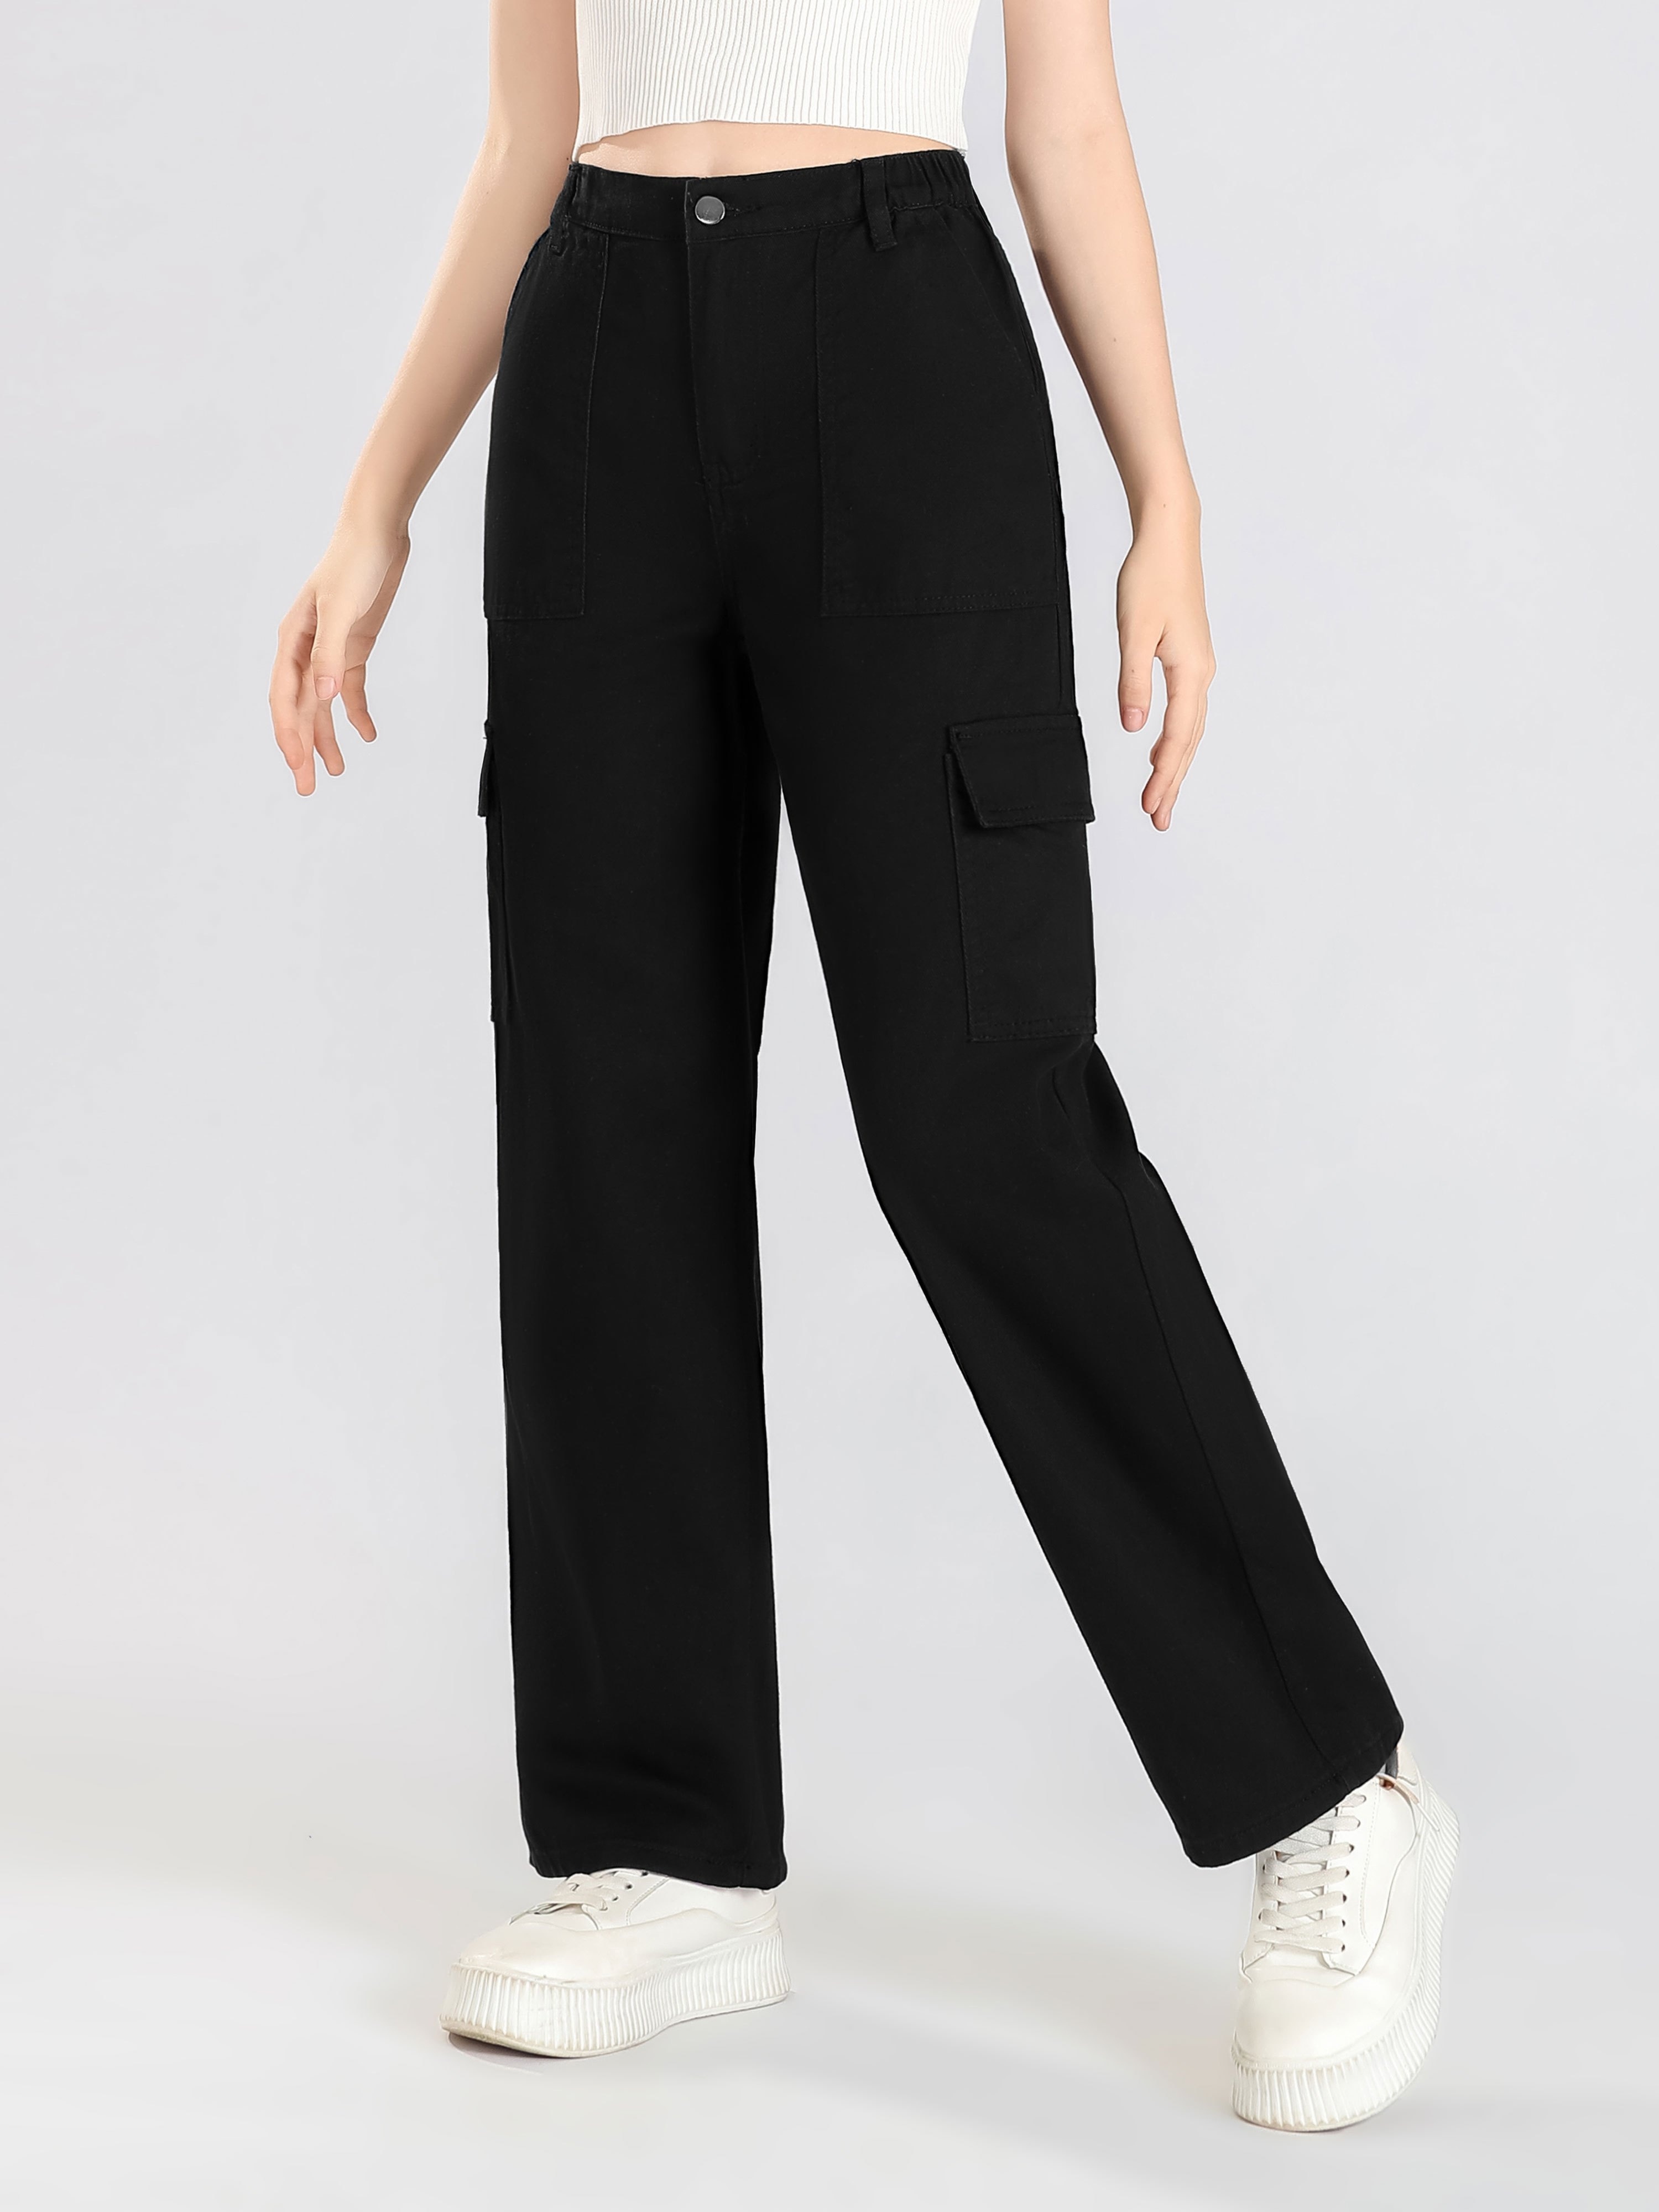 Cargo Pants For Women's: Trendy Baggy & Cotton Pants 